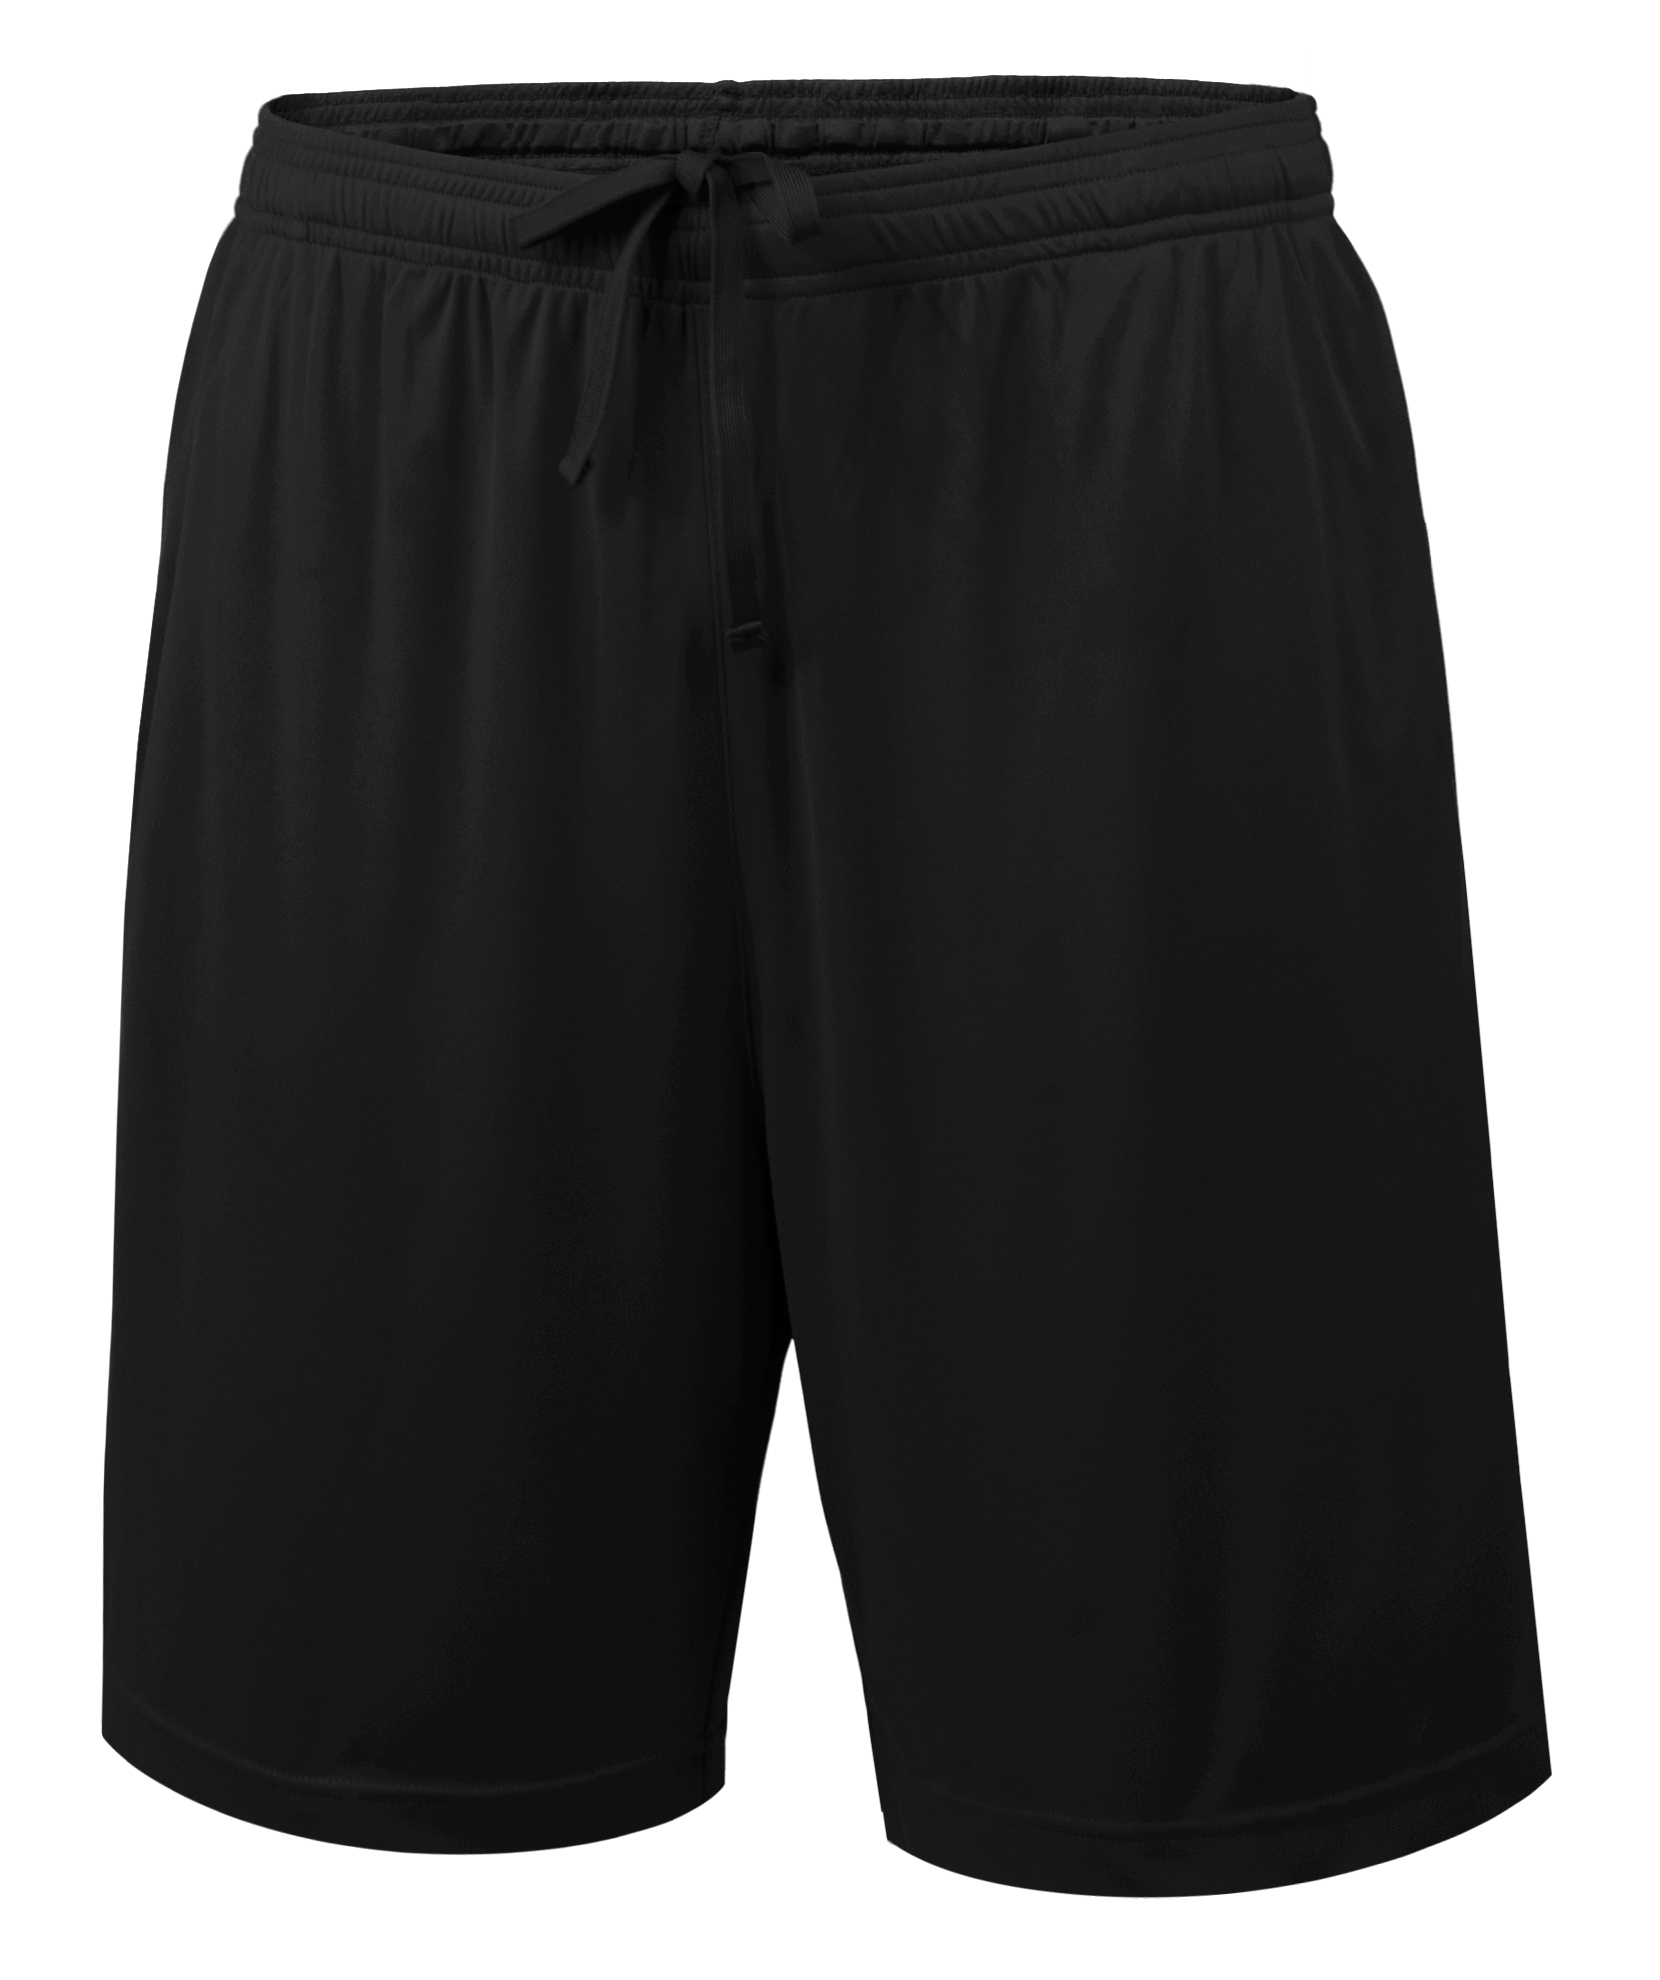 BAW Athletic Wear S710 - Men's 11" 2-Pocket XT Short